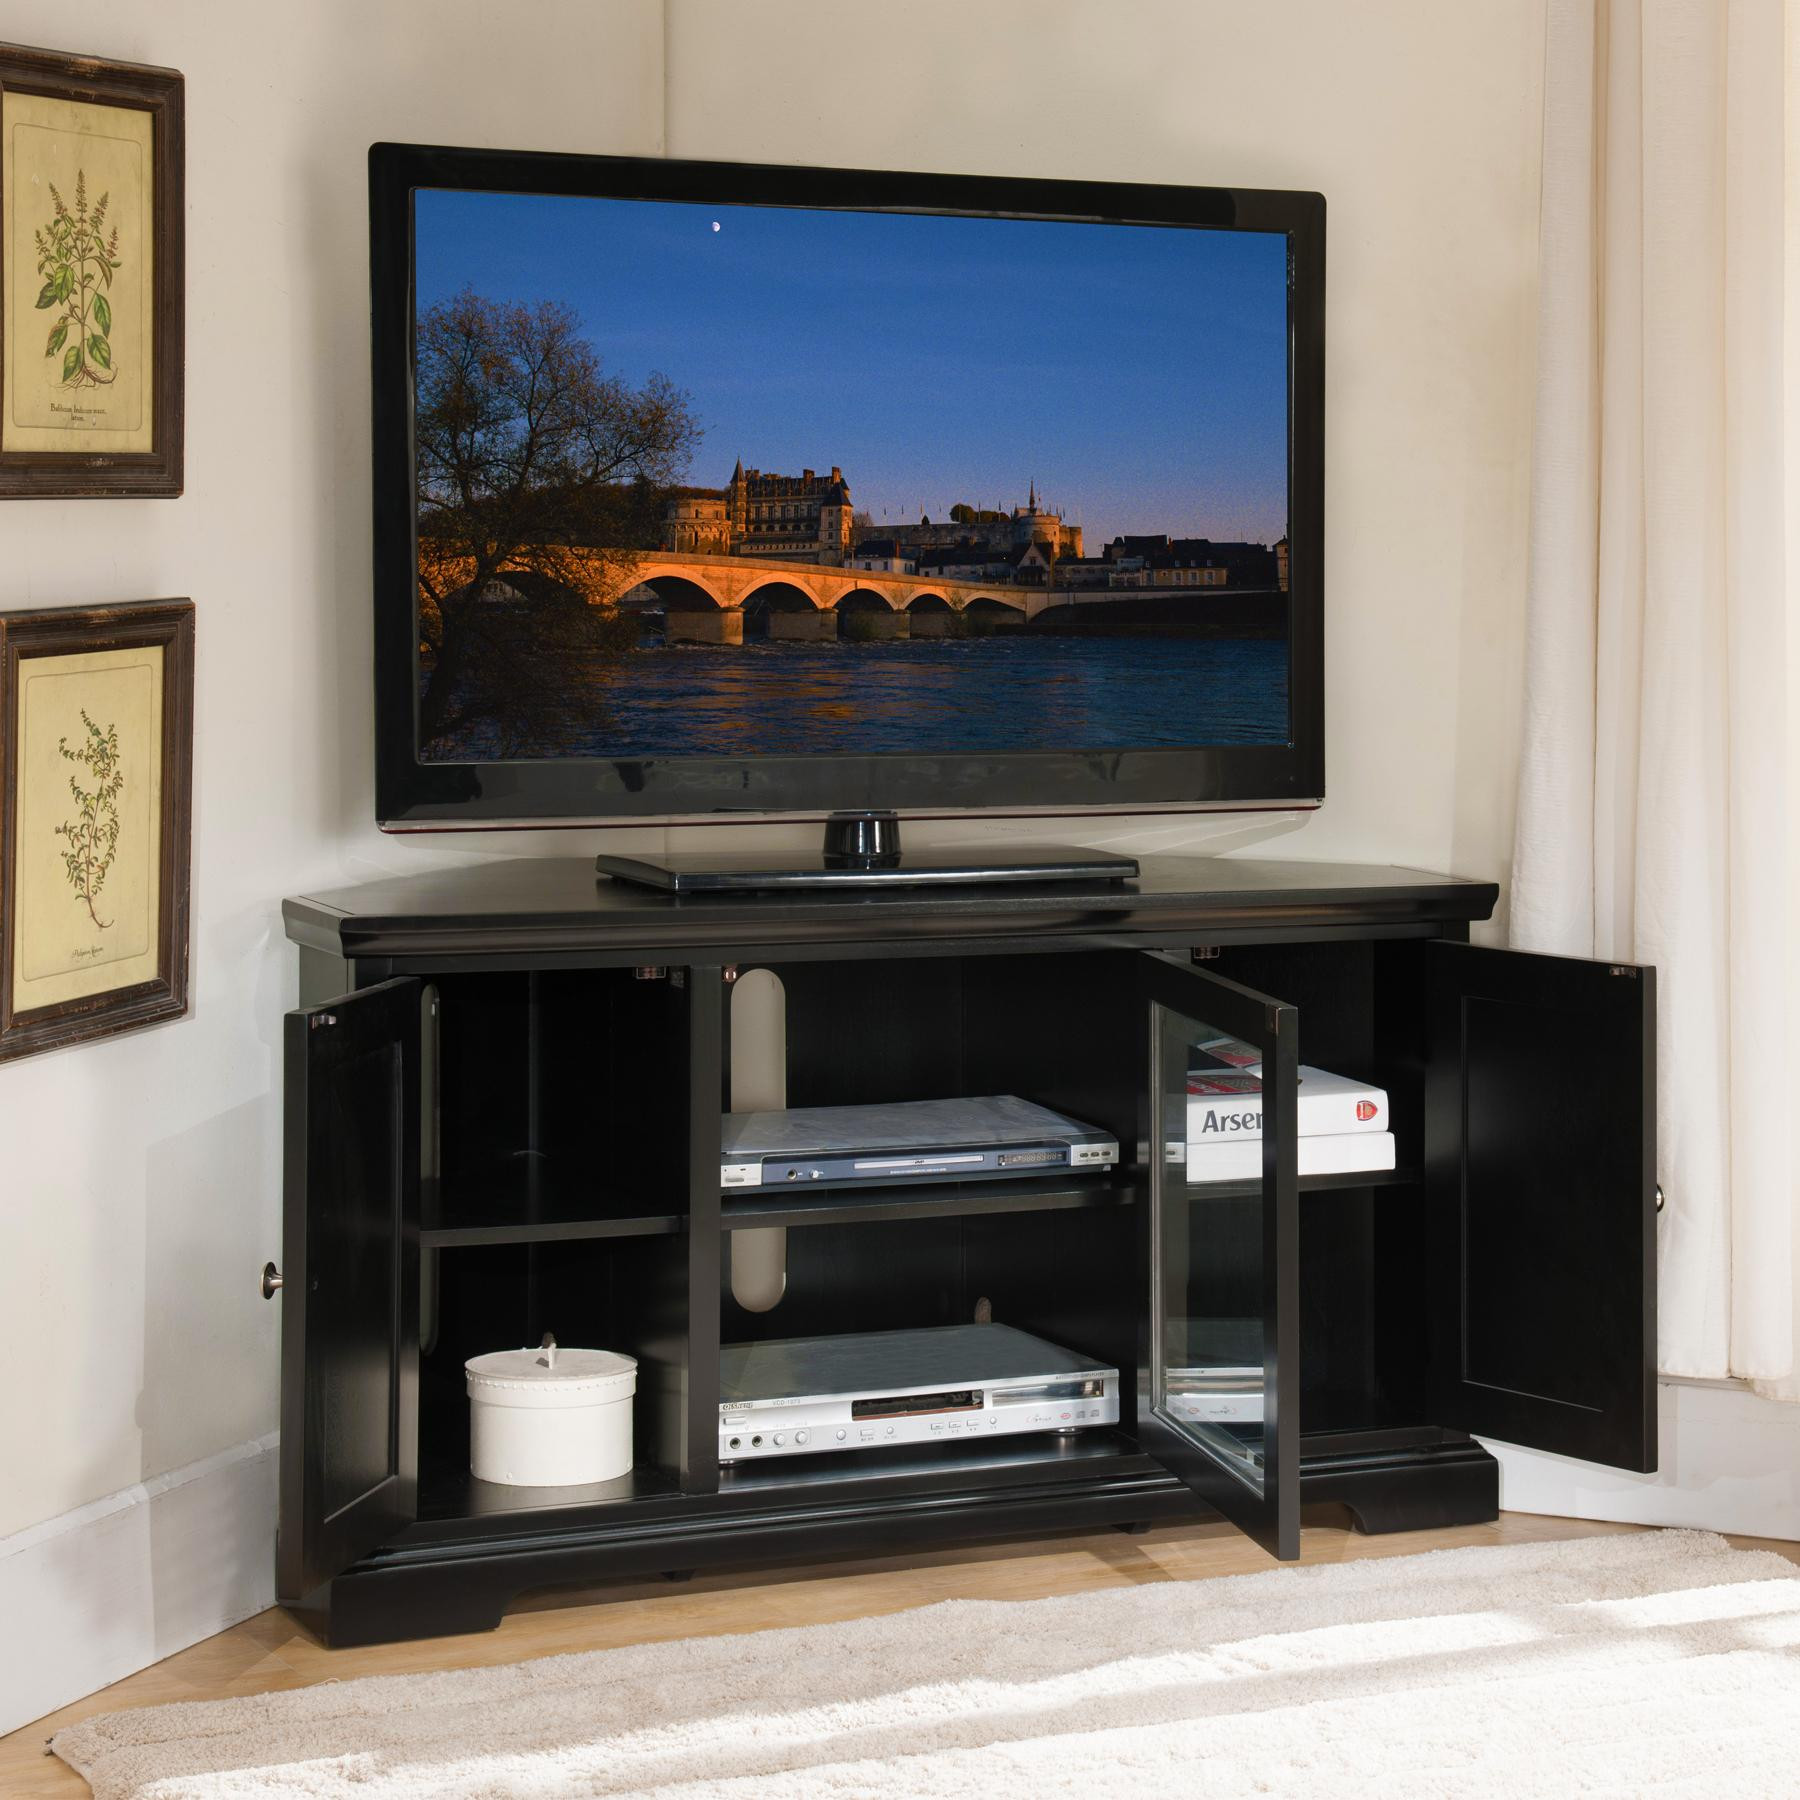 Small Tv For Kitchen Amazon
 Amazon Leick Black Hardwood Corner TV Stand 56 Inch